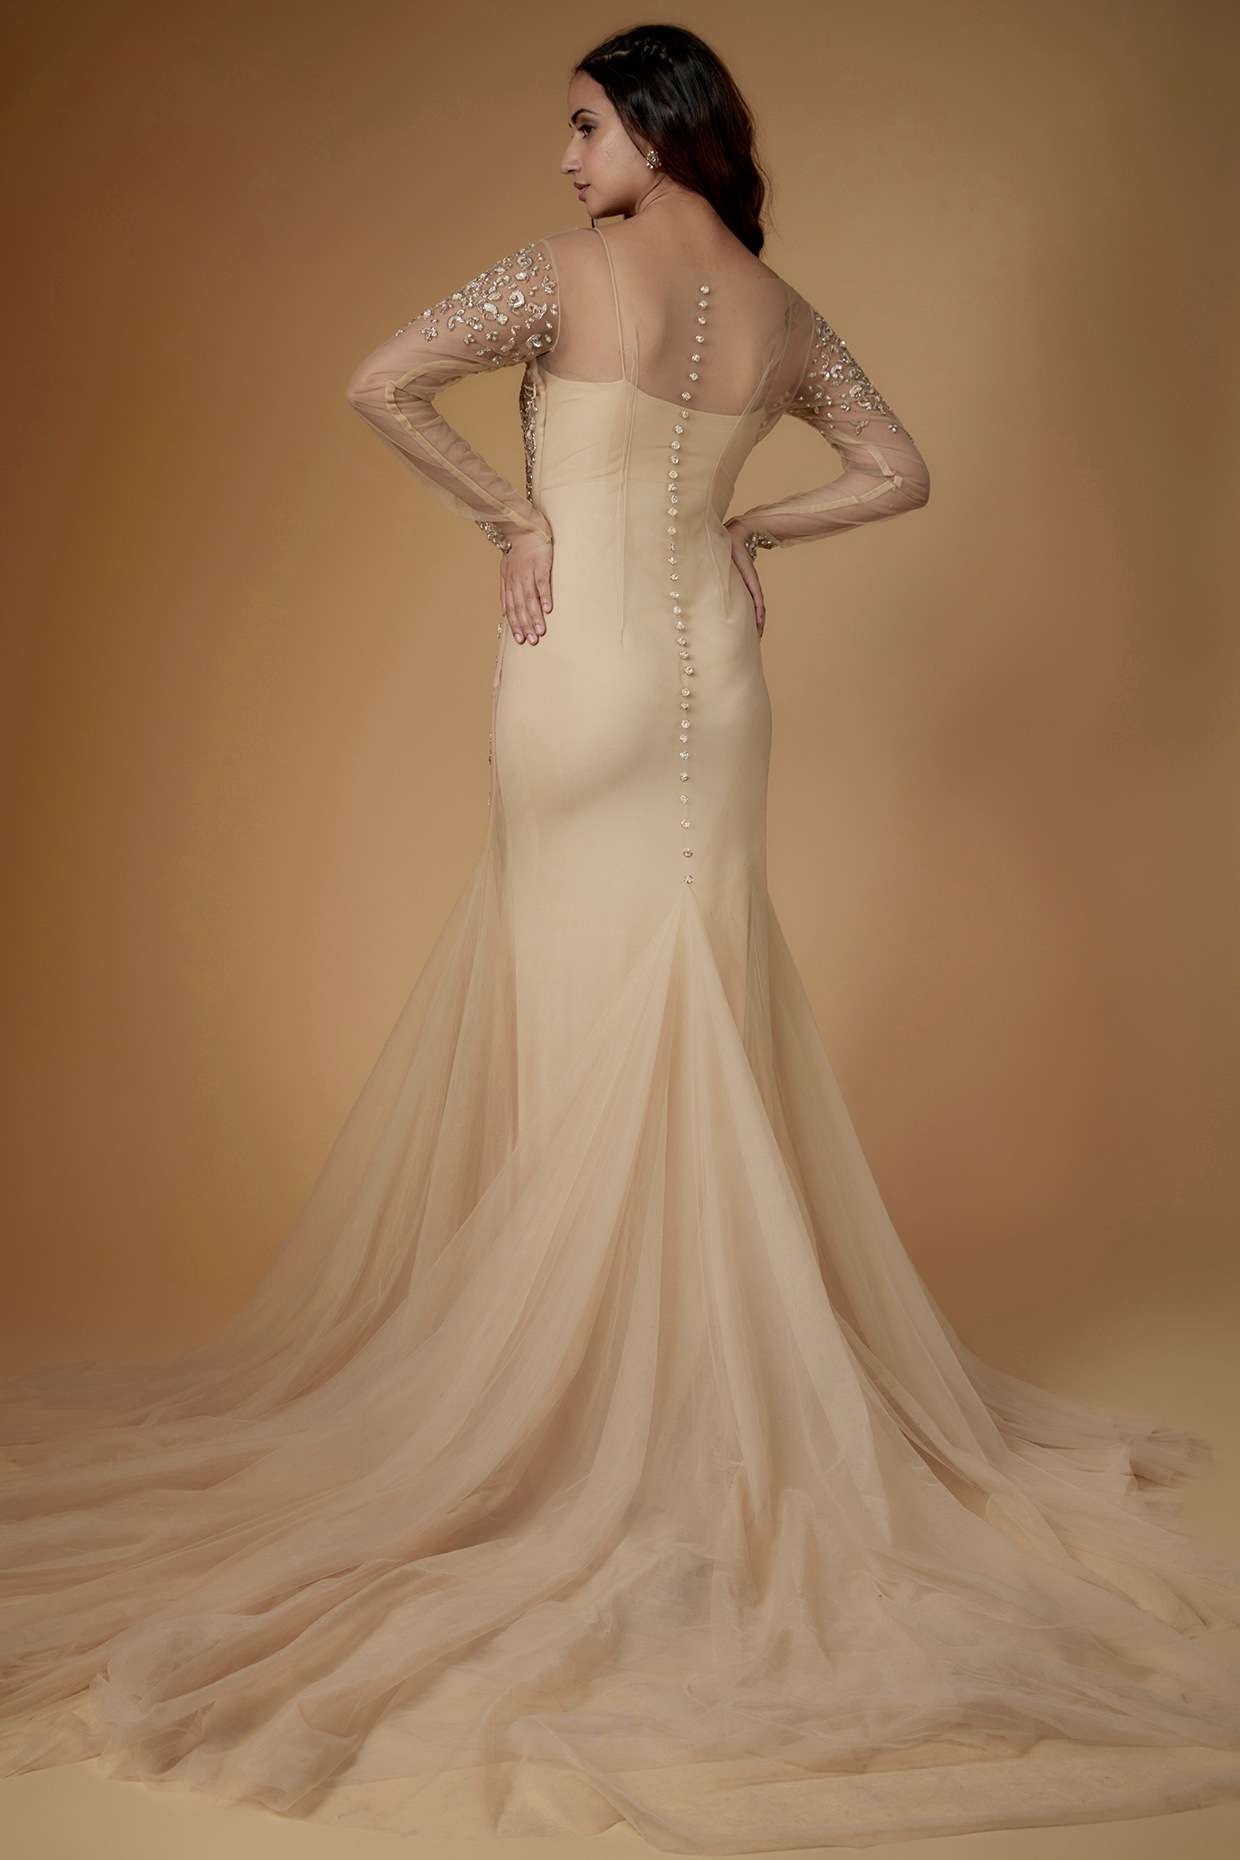 Shop Designer Evening Gowns & Wedding Gowns | Maticevski